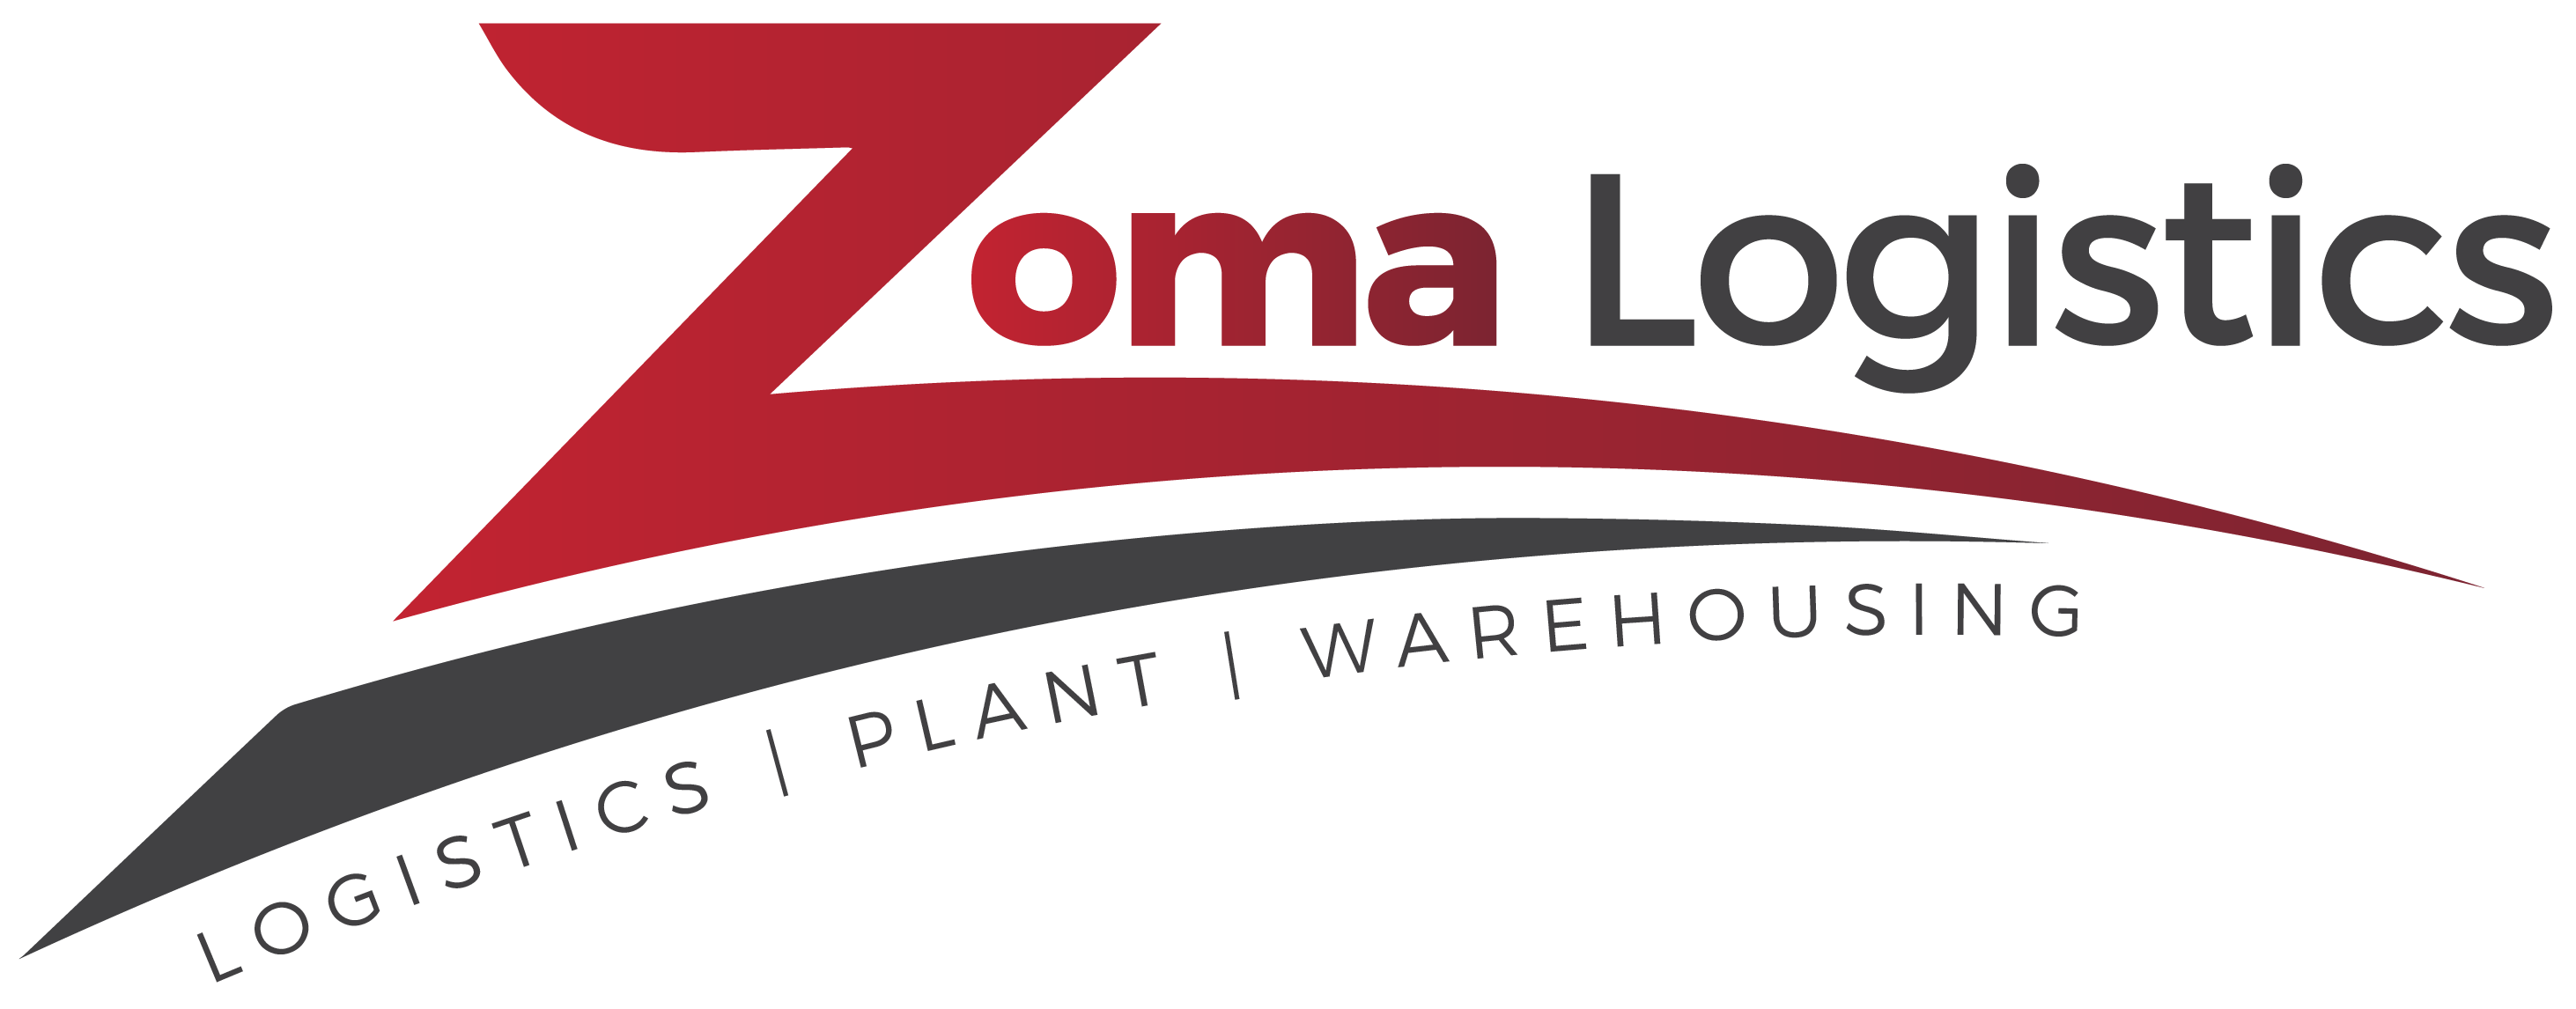 Zoma-Logistics-Logo-1